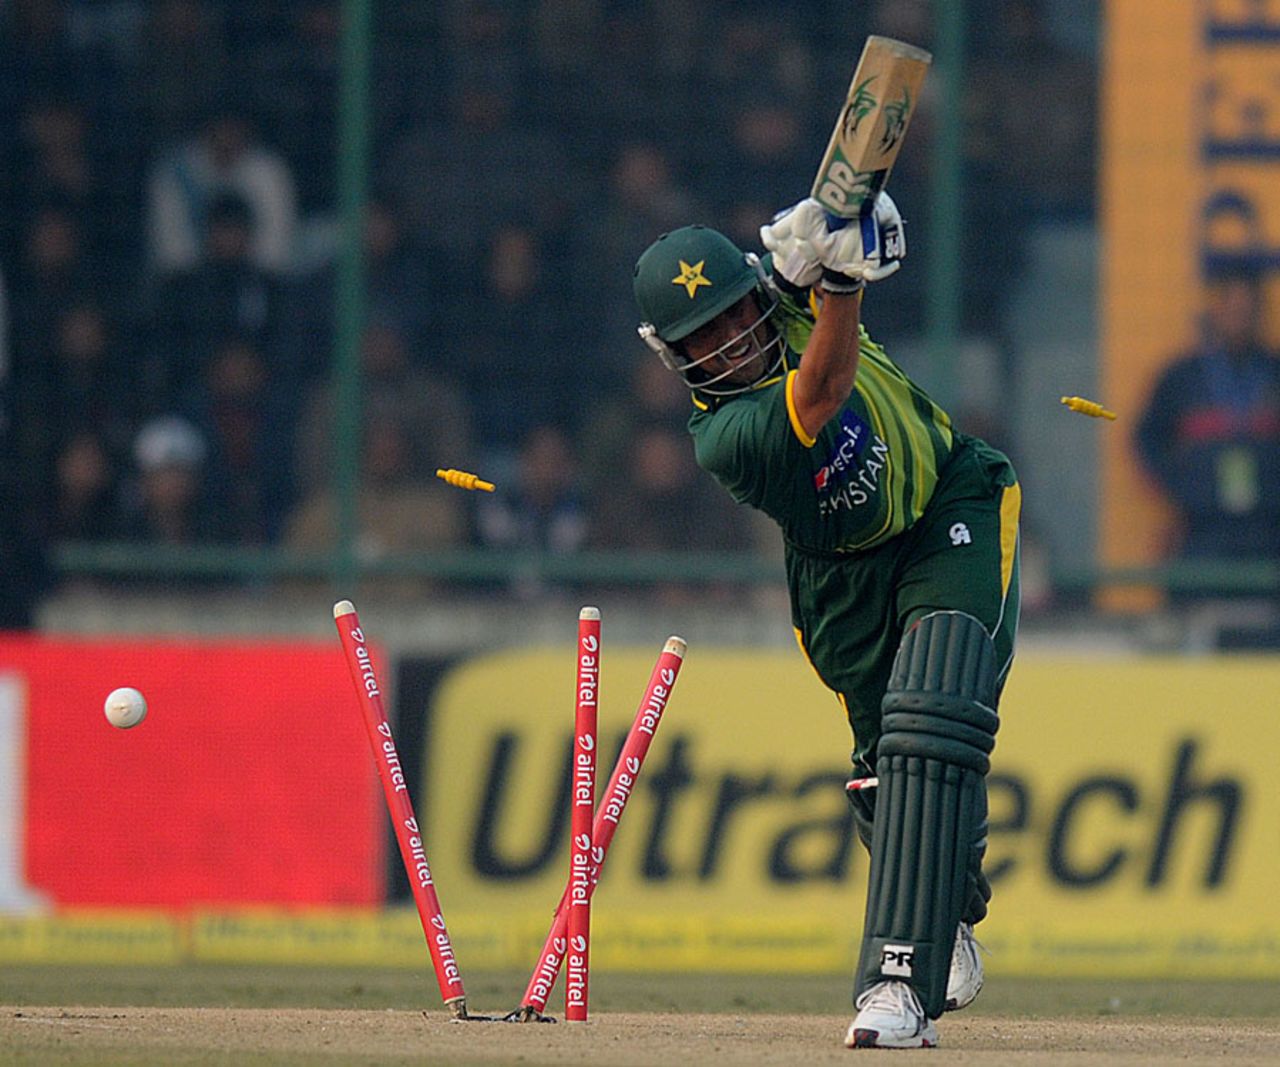 Younis Khan was bowled for 6 by Bhuvneshwar Kumar, India v Pakistan, 3rd ODI, Delhi, January 6, 2013